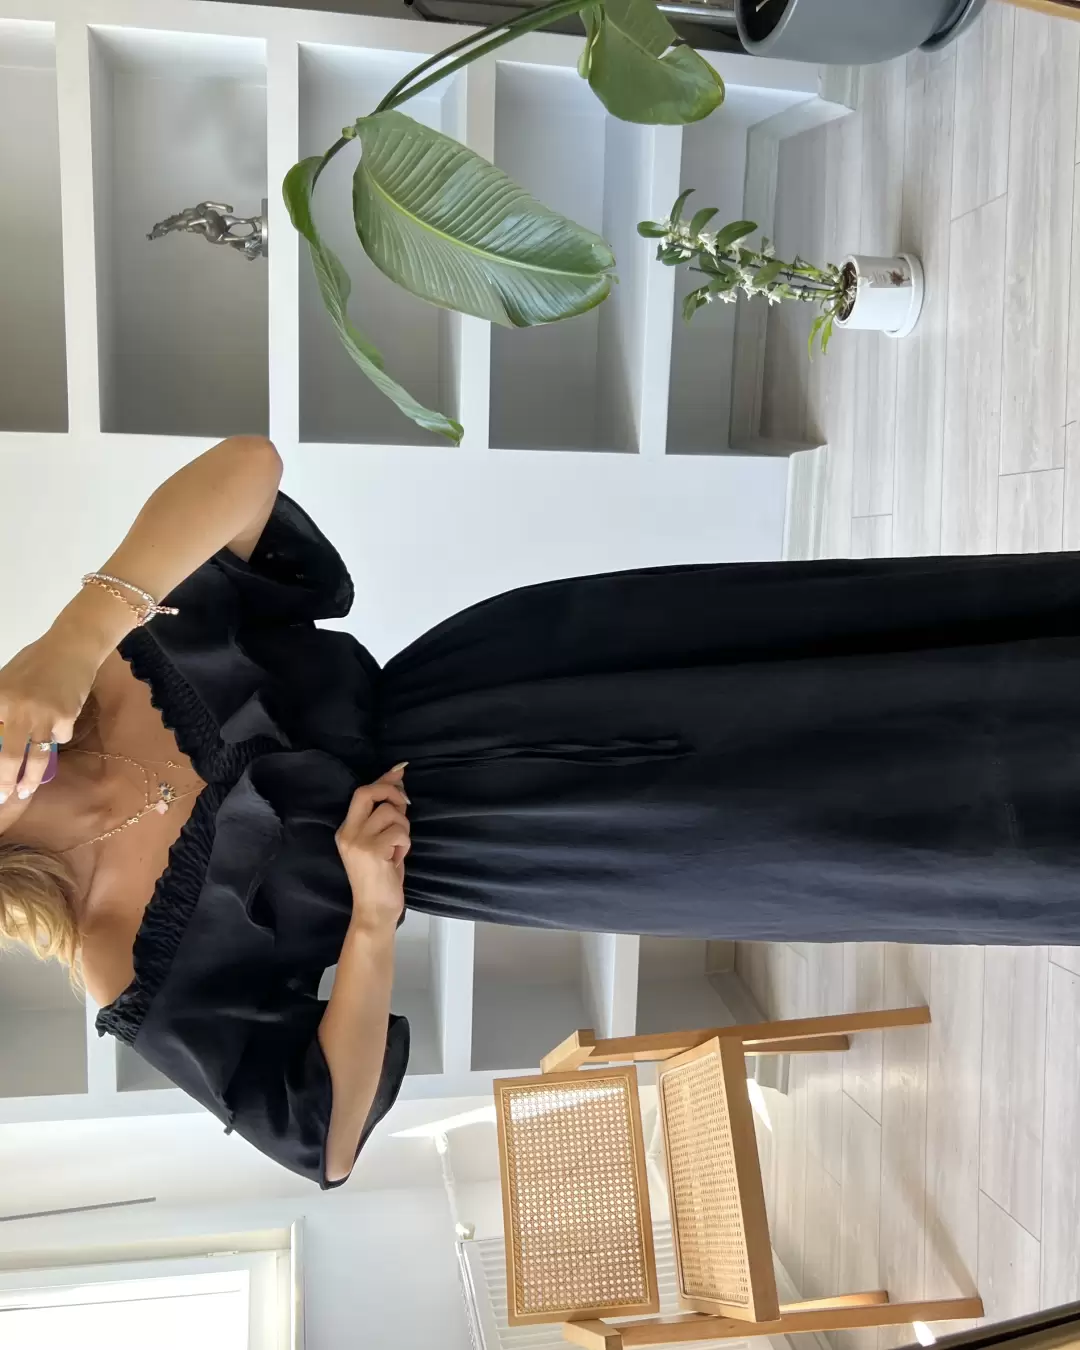 Siyah Madonna Yaka Ayrobin Elbise